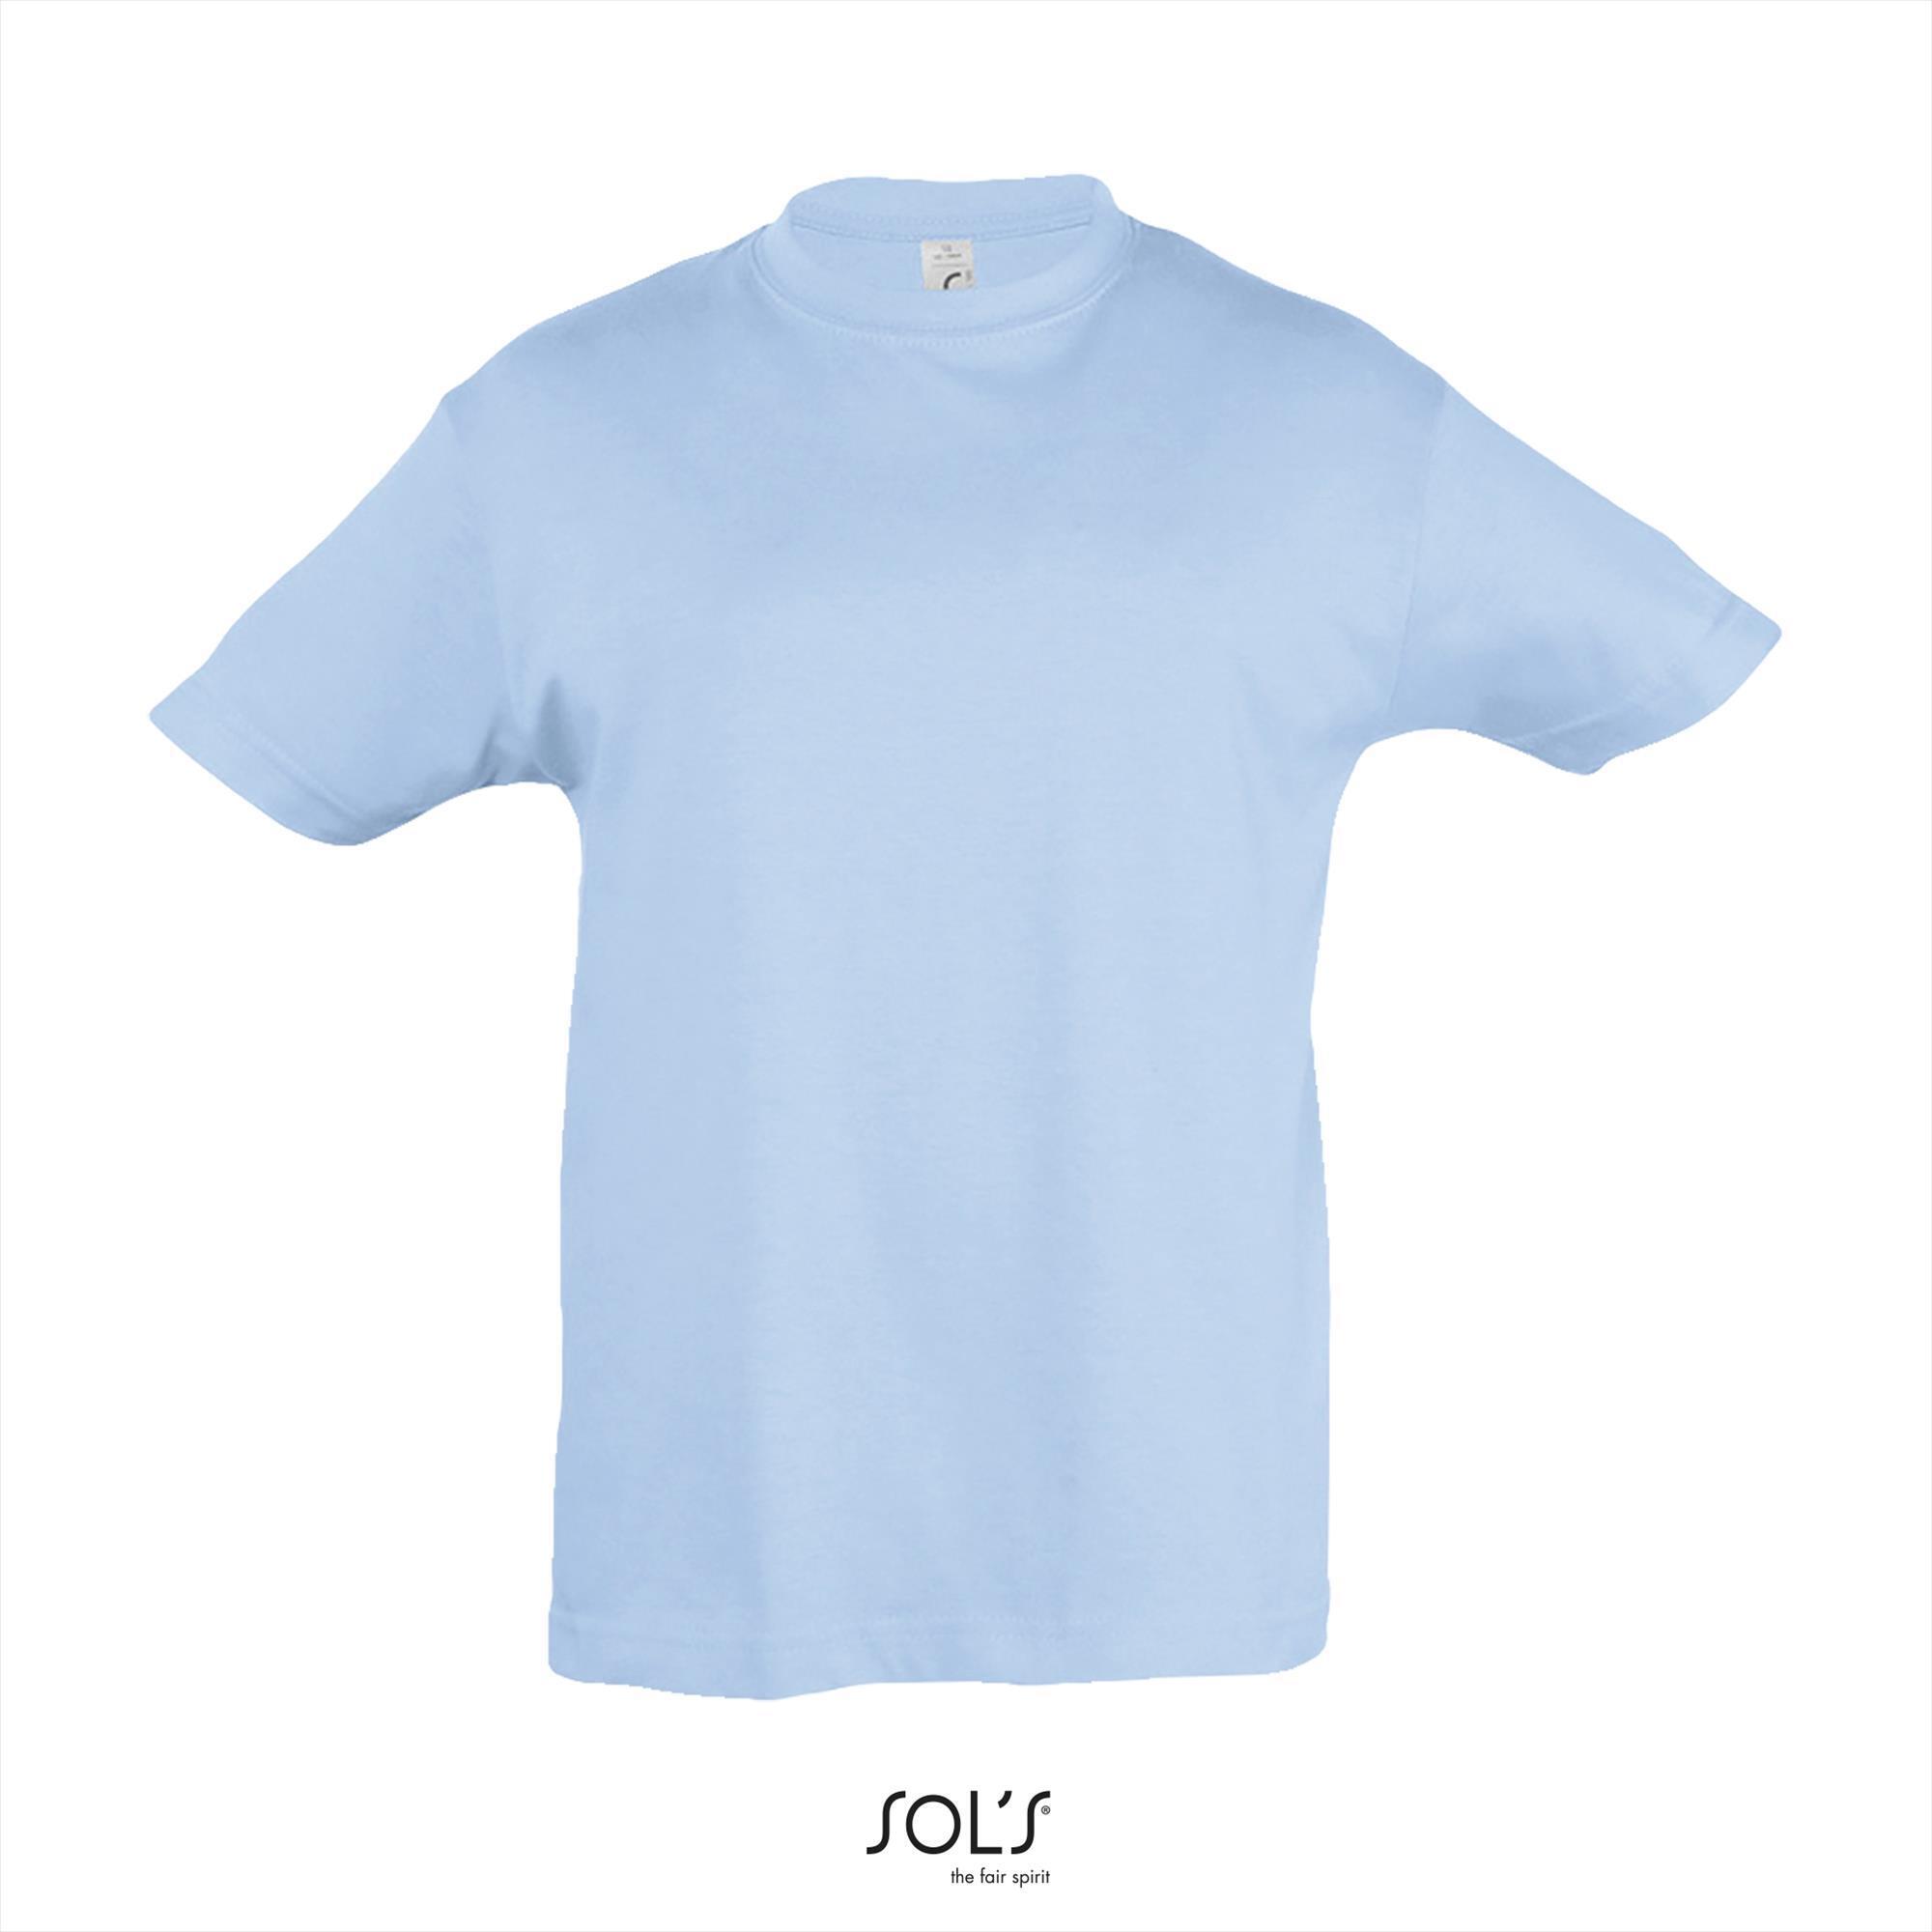 Klassiek kinder T-shirt hemelsblauw